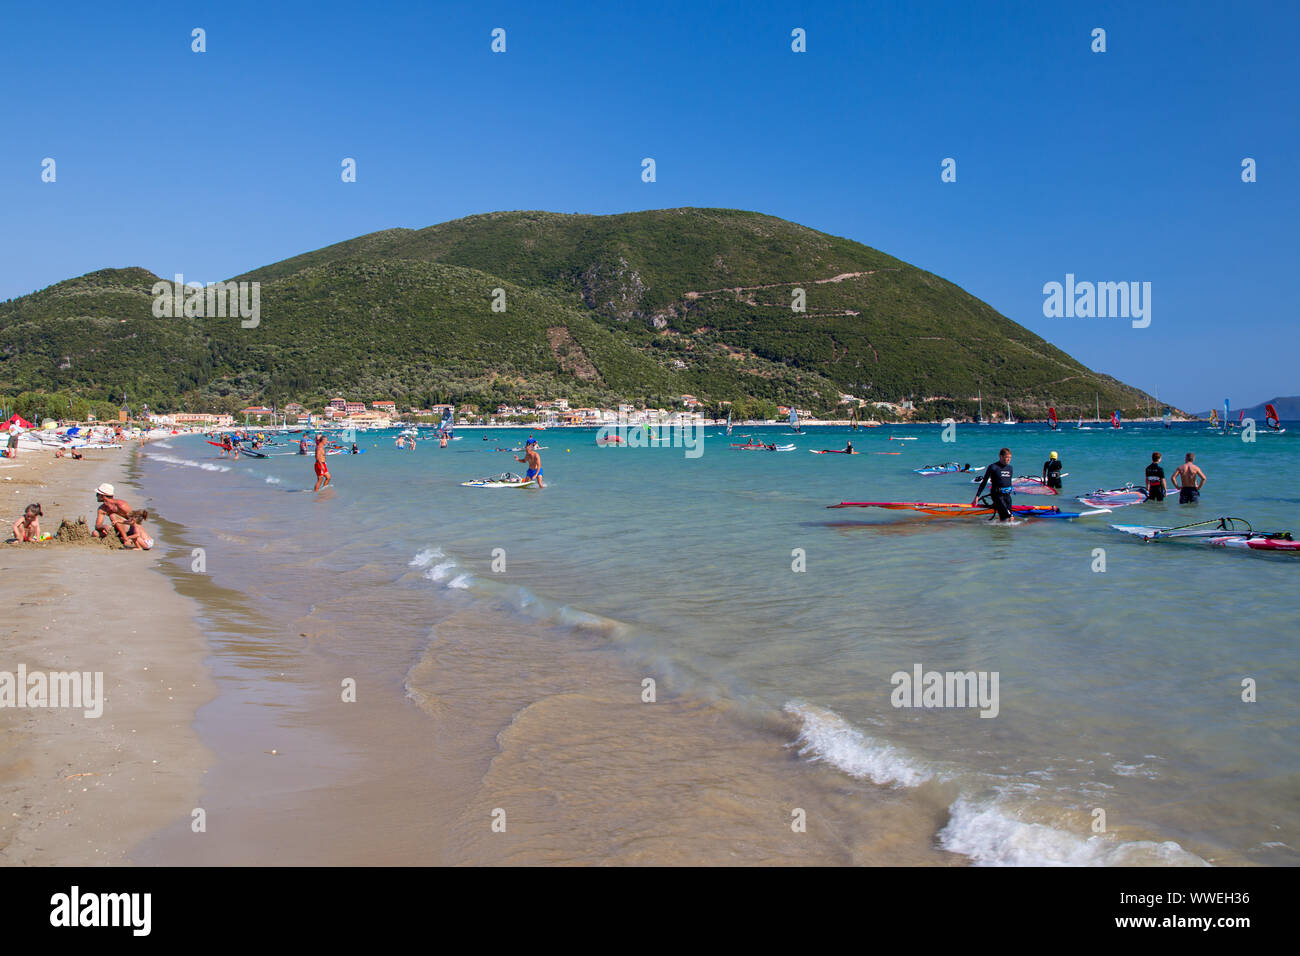 Learning to Windsurf at Vasiliki beach, Lefkada / Lefkas Island, Greece Stock Photo